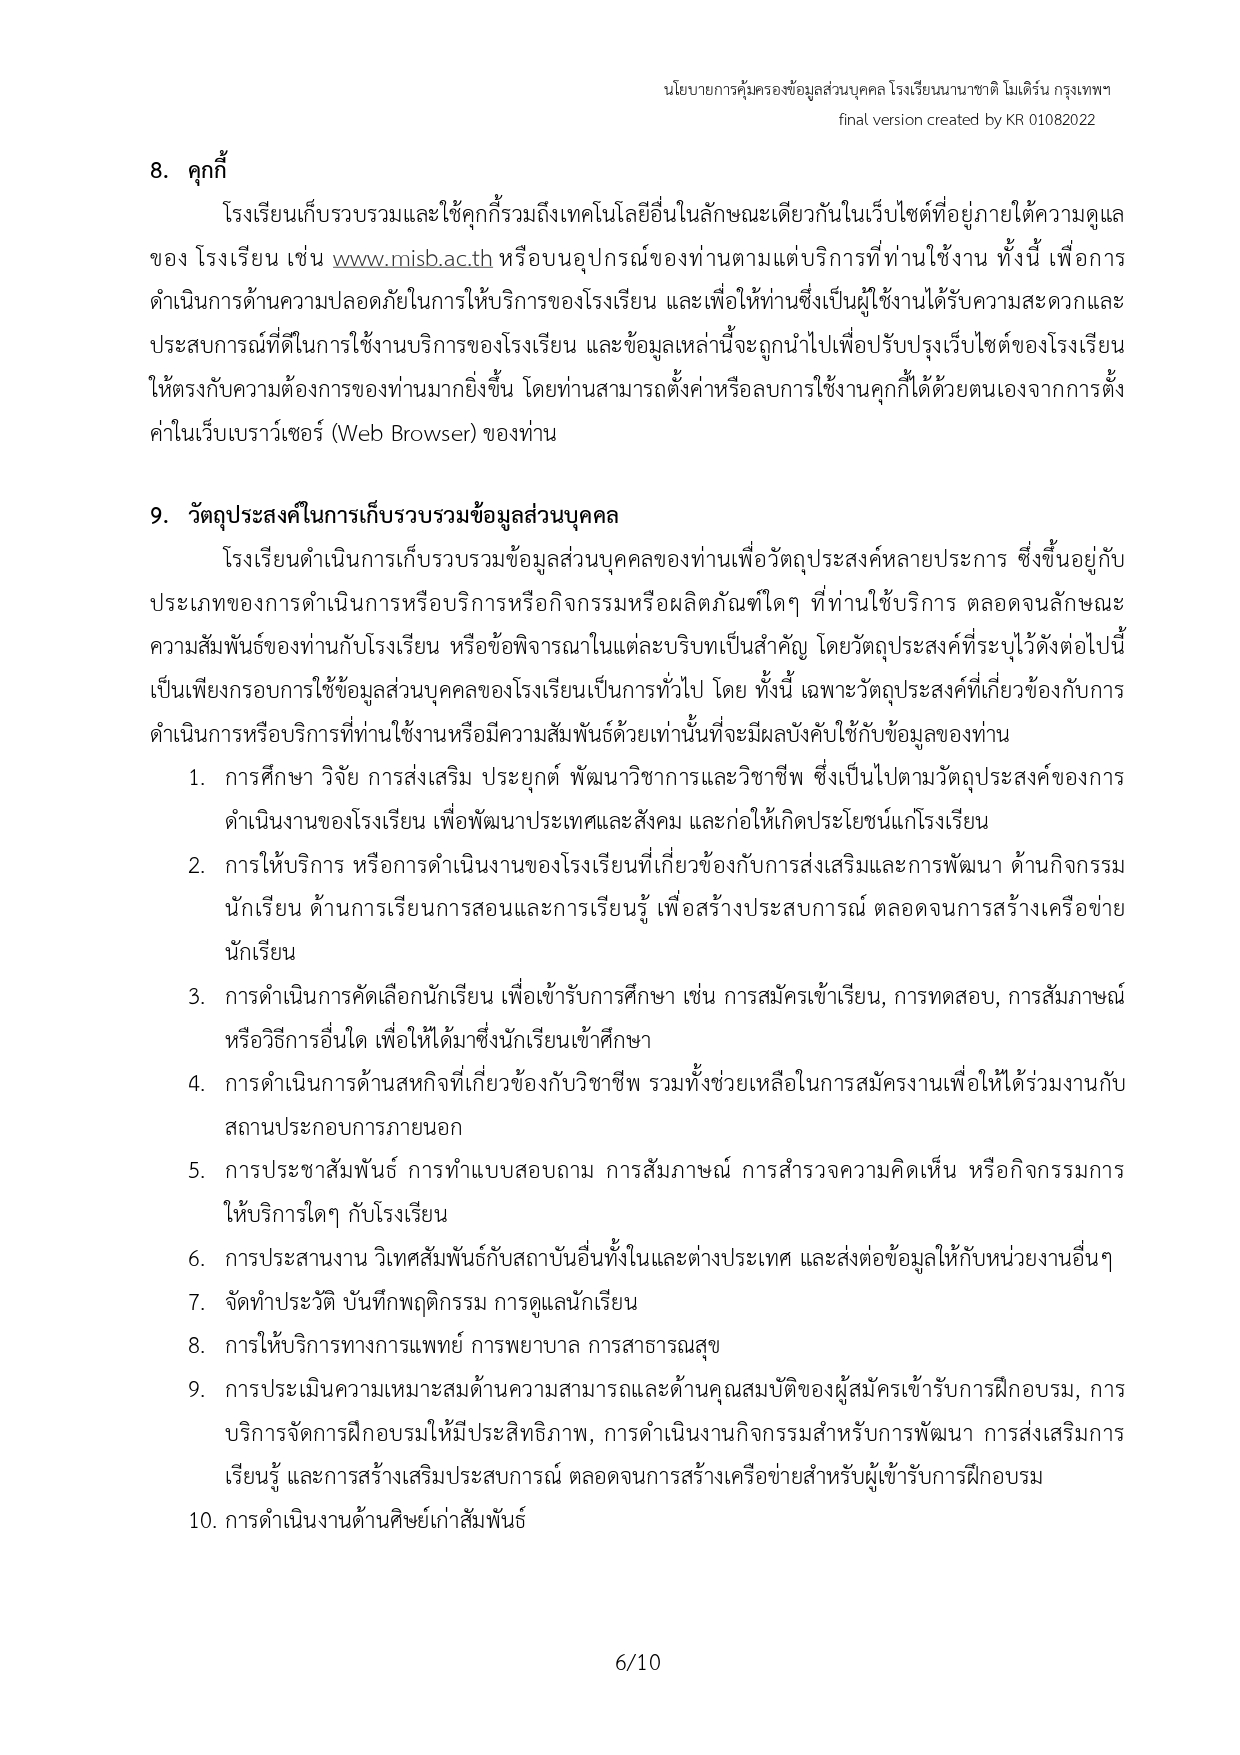 PDPA MISB ภาษาไทย final version 01012566 ไม่ลงชื่อ page 0006